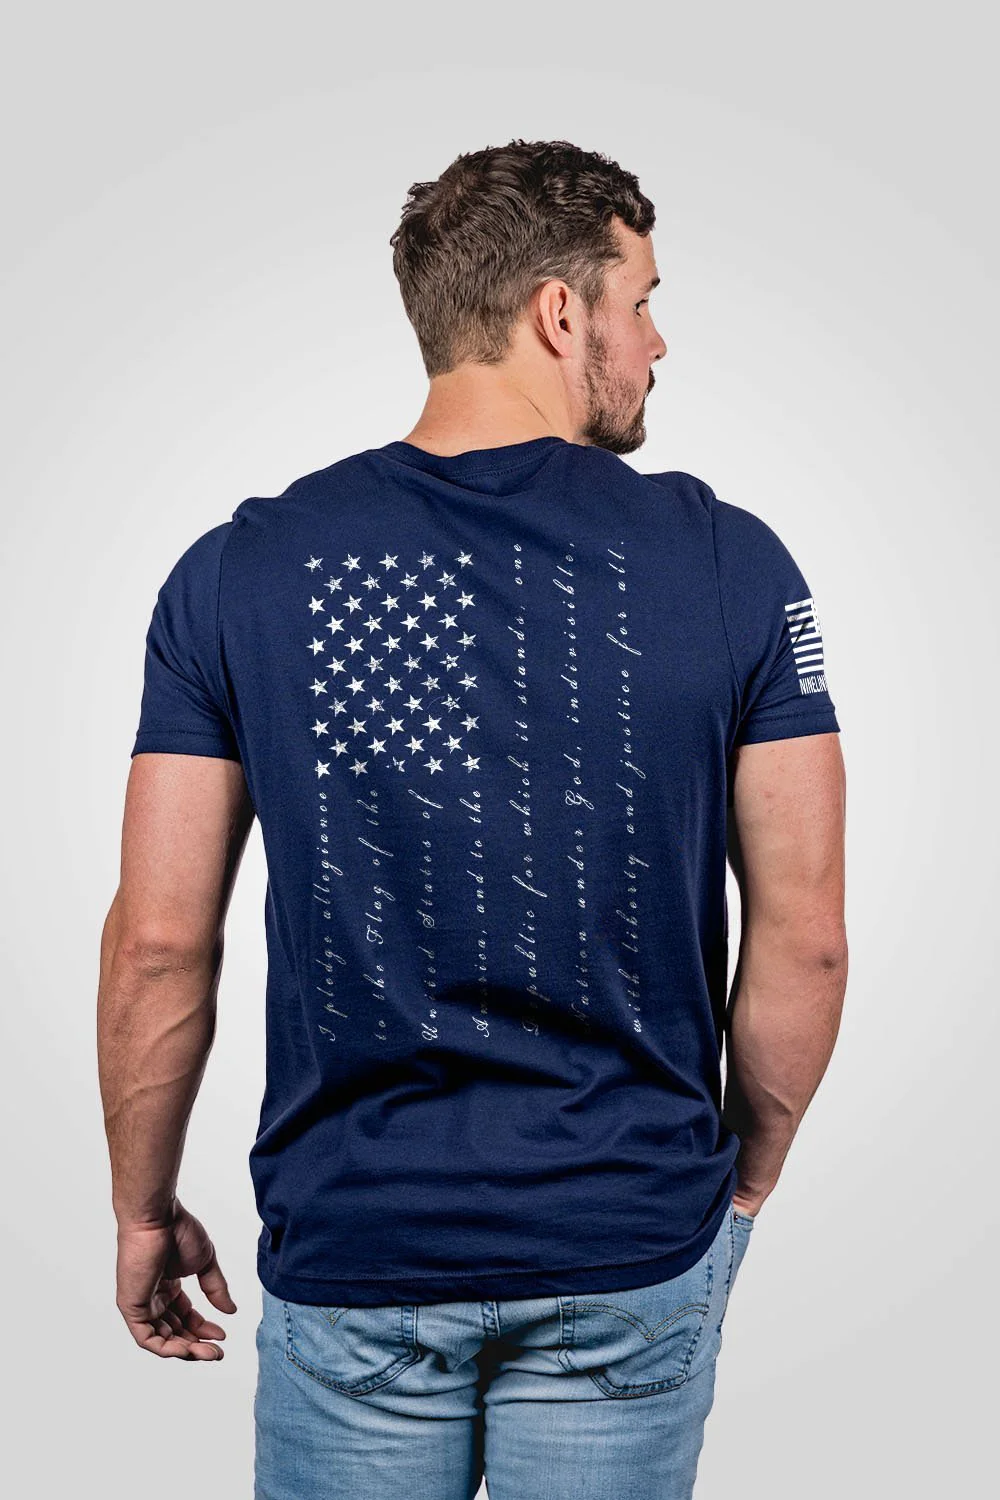 Nine Line Men's The Pledge T-Shirt posted by ProdOrigin USA in Men's Apparel